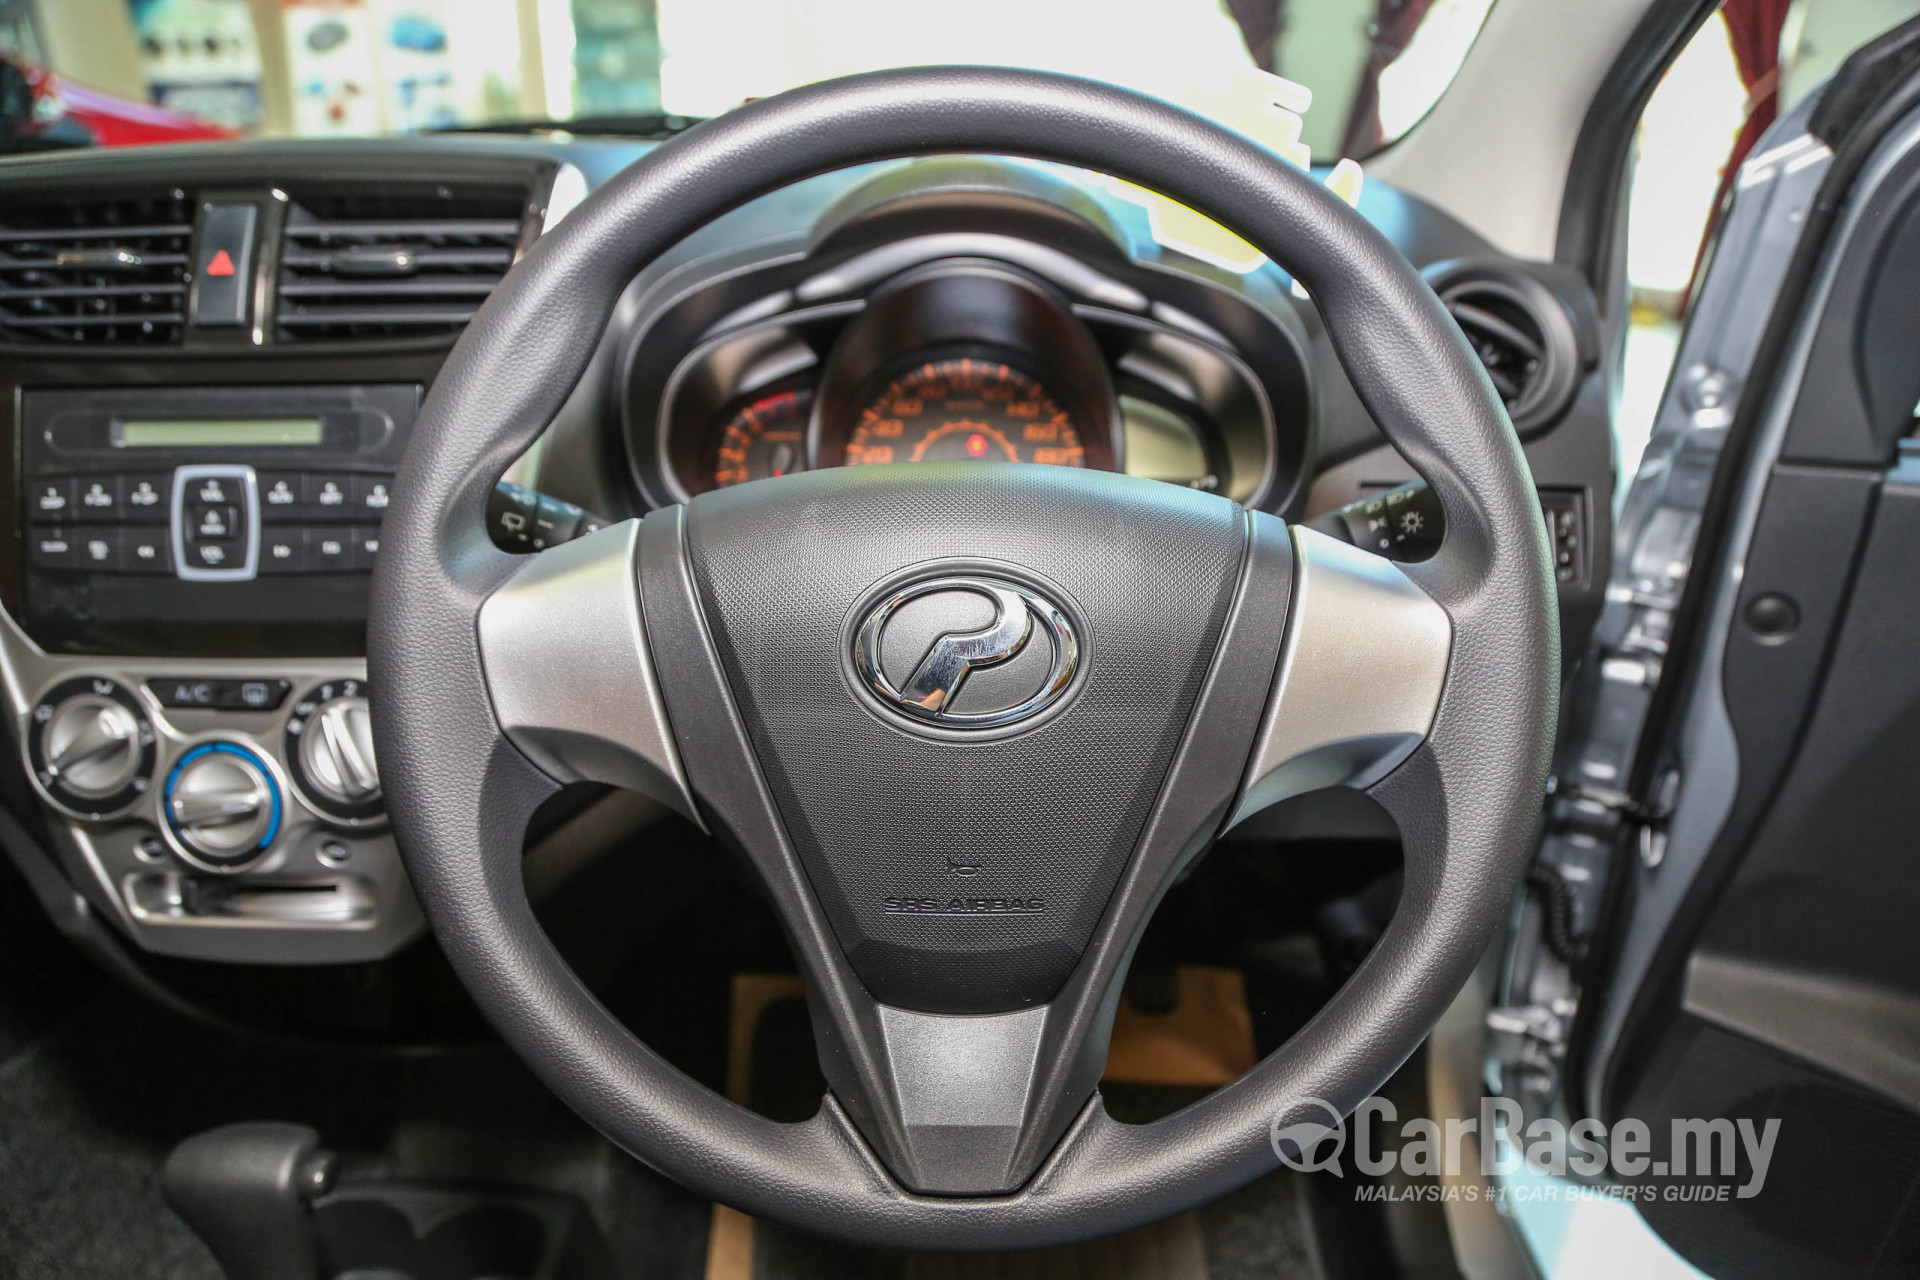 Perodua Axia Mk1 Facelift (2017) Interior Image #35110 in 